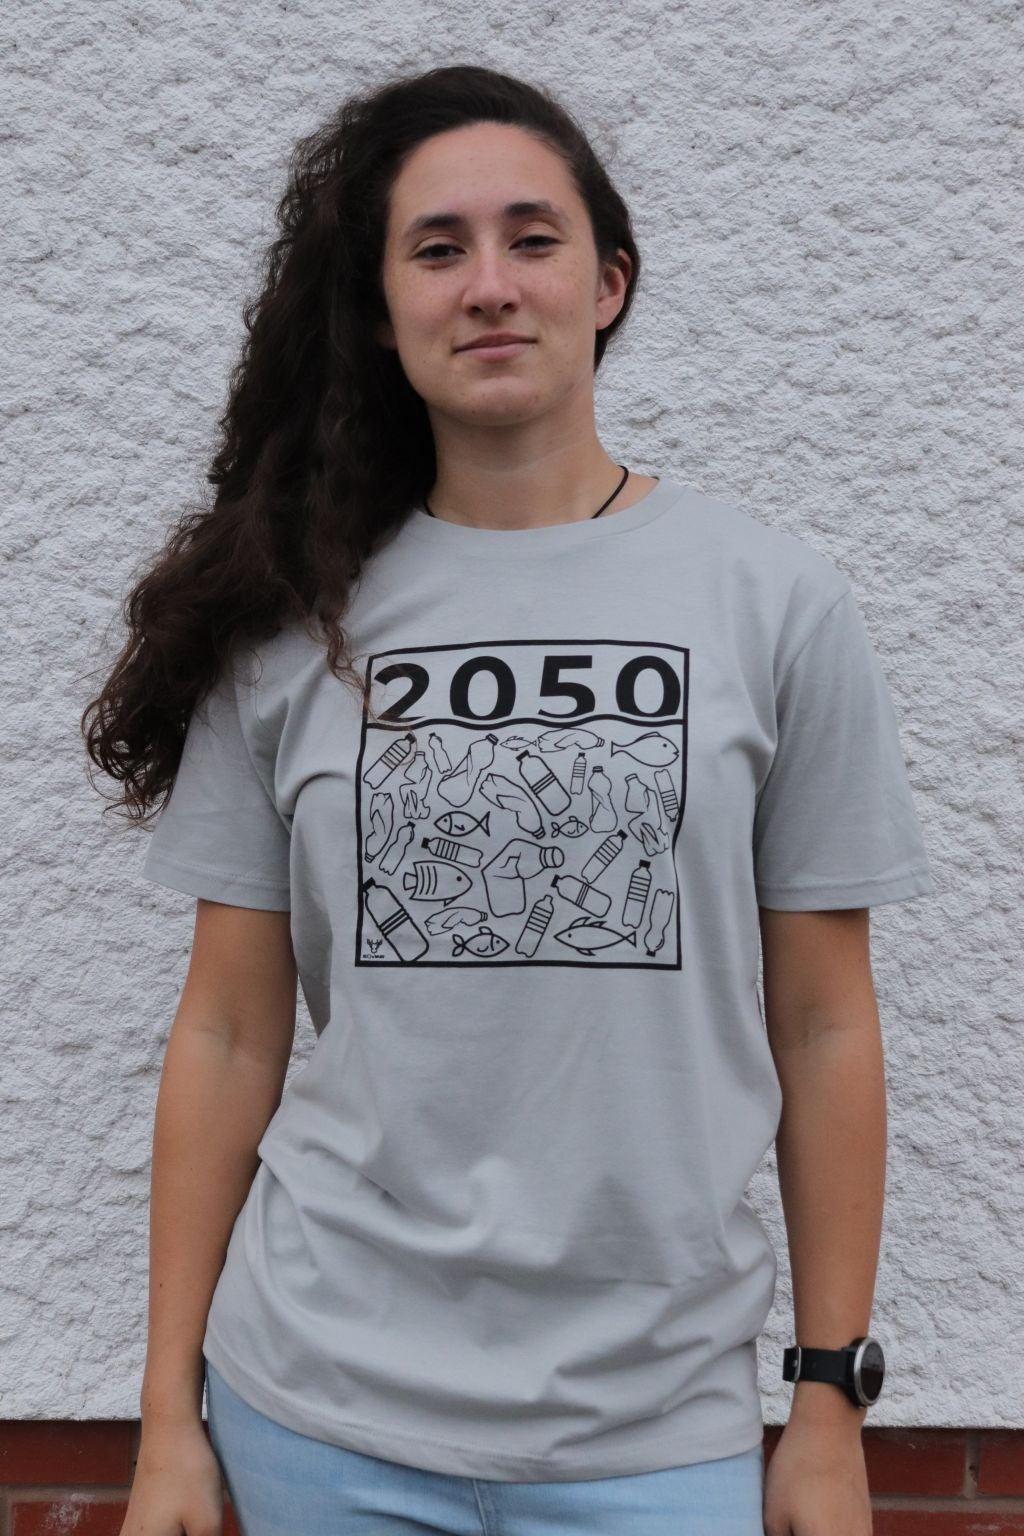 Ocean pollution t-shirt - ECO aWARE